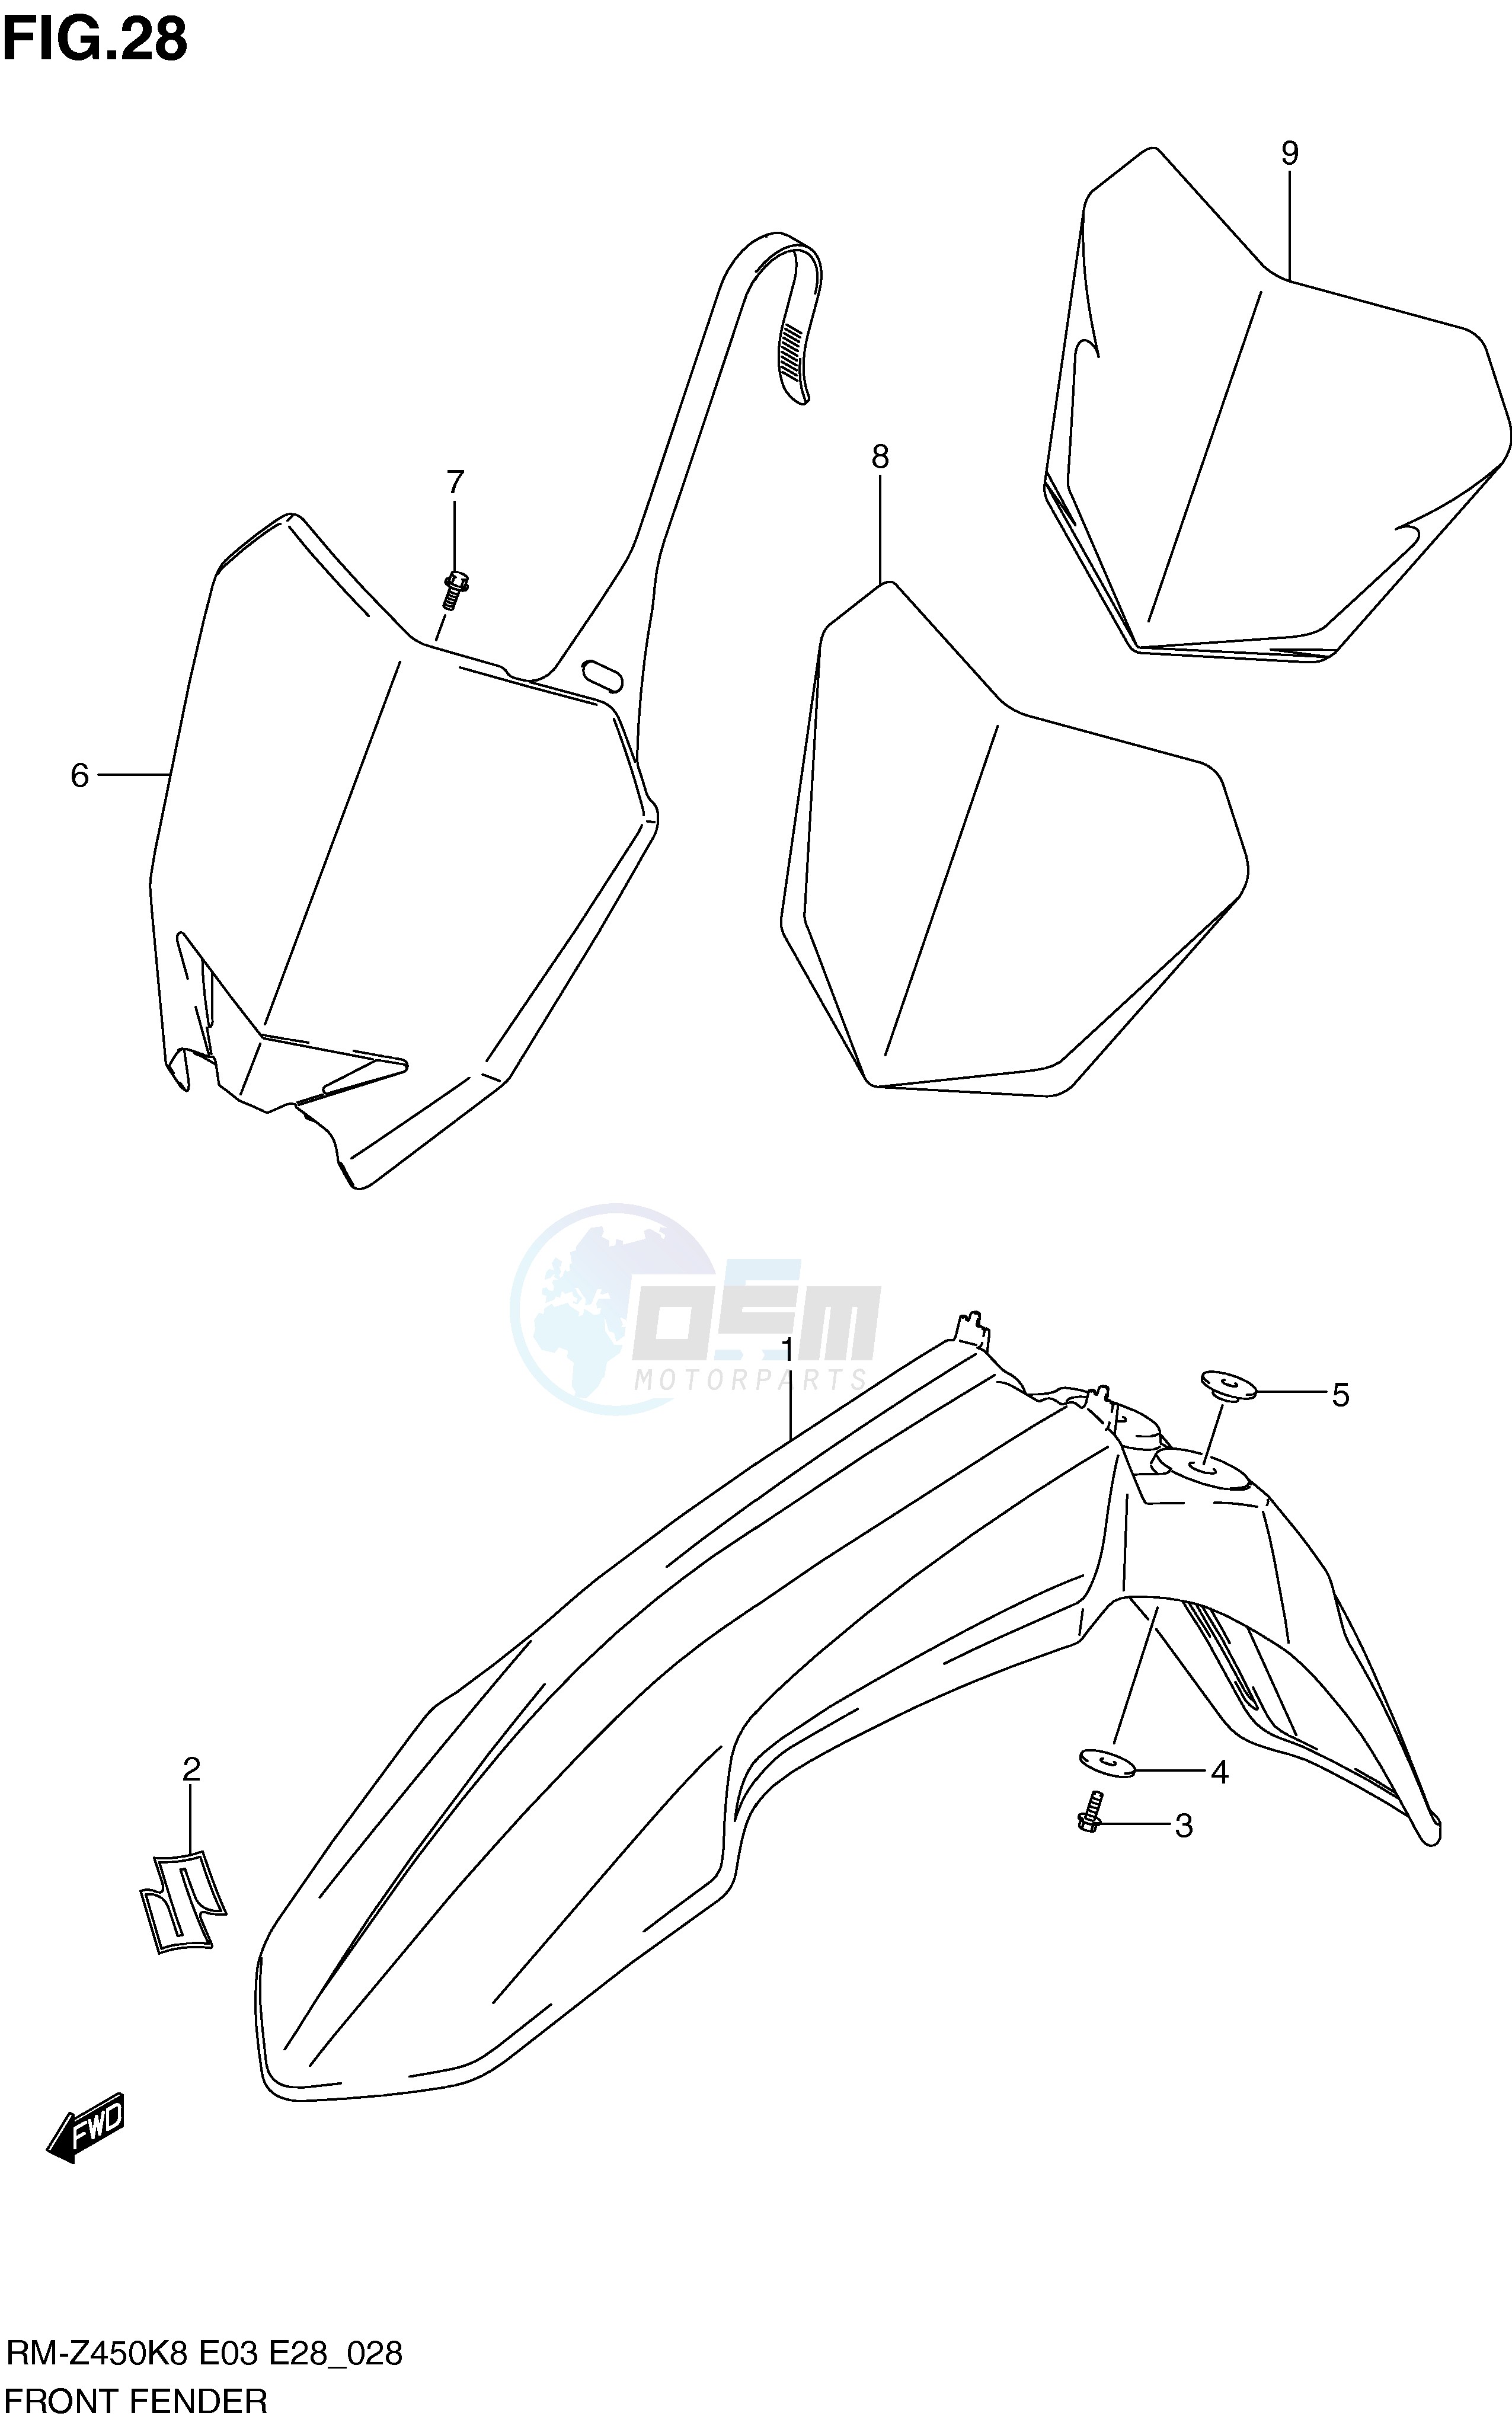 FRONT FENDER (RM-Z450K8 K9 L0) blueprint